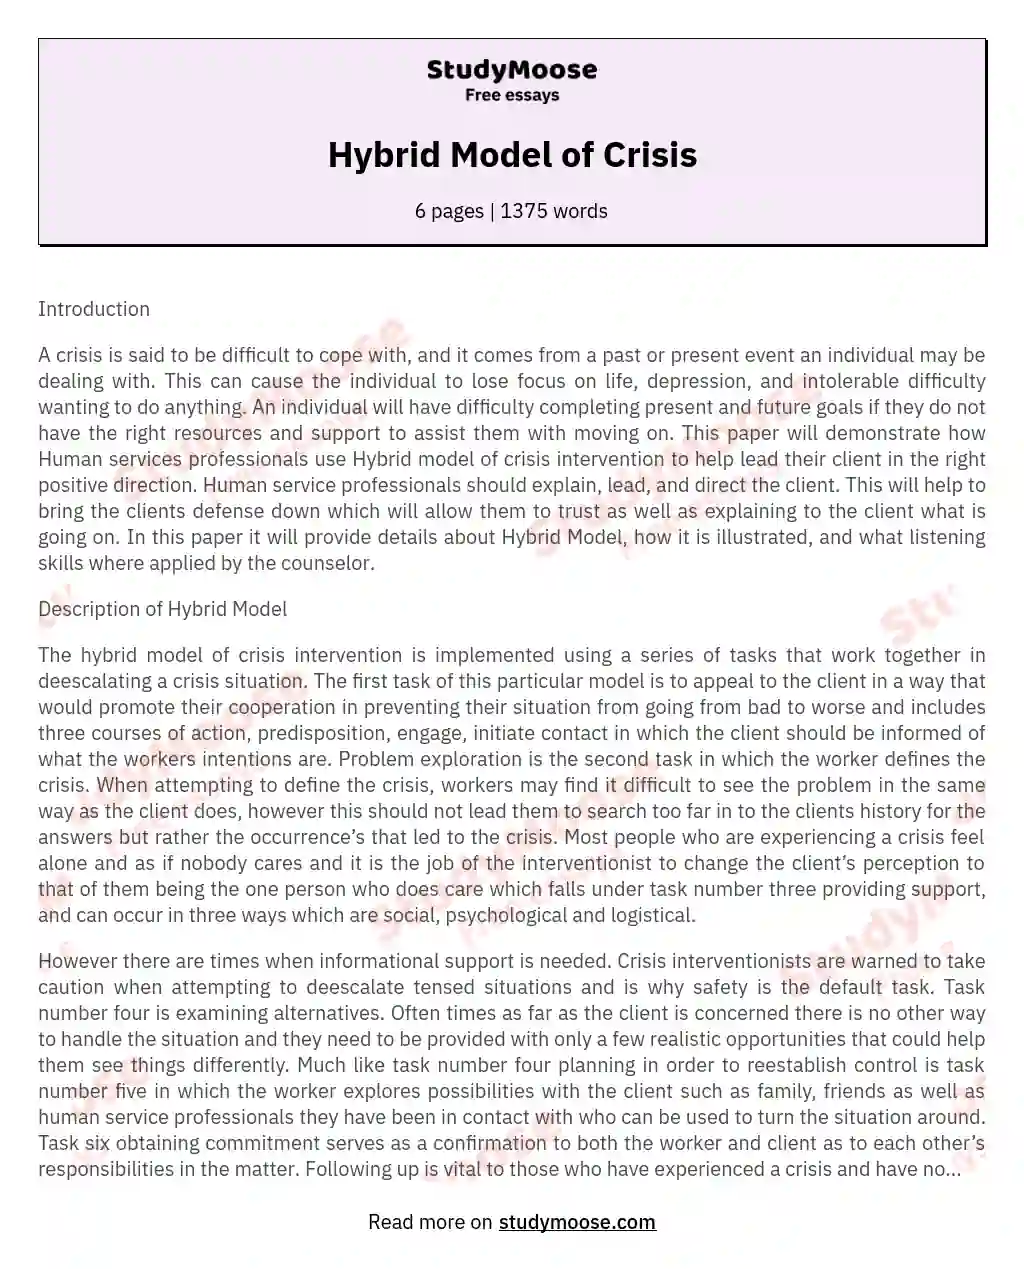 Hybrid Model of Crisis